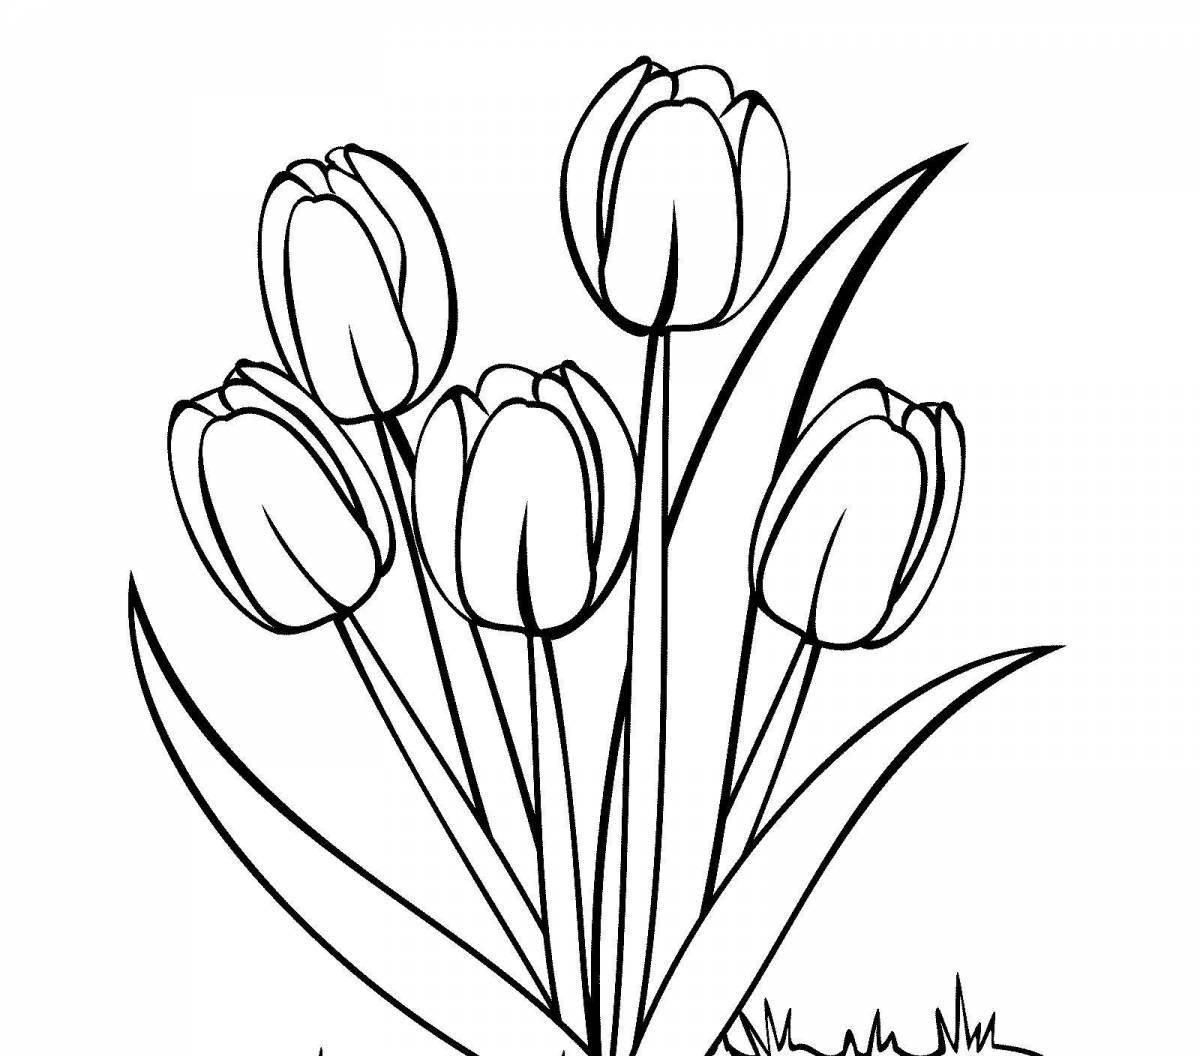 Exquisite tulip coloring book for kids